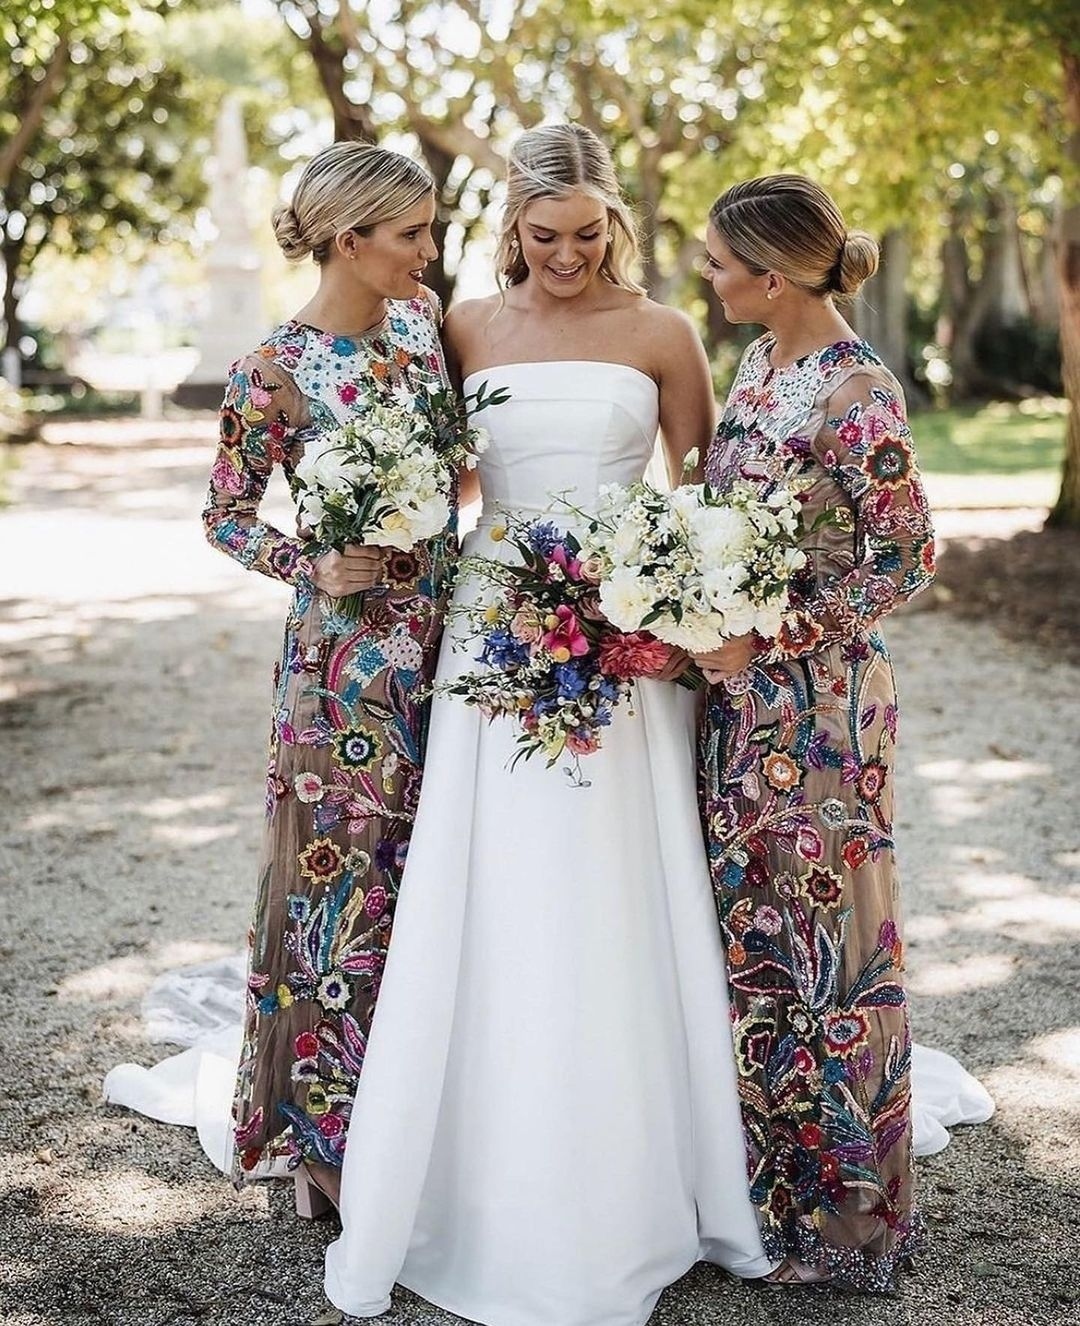 Colorful bridesmaid dresses